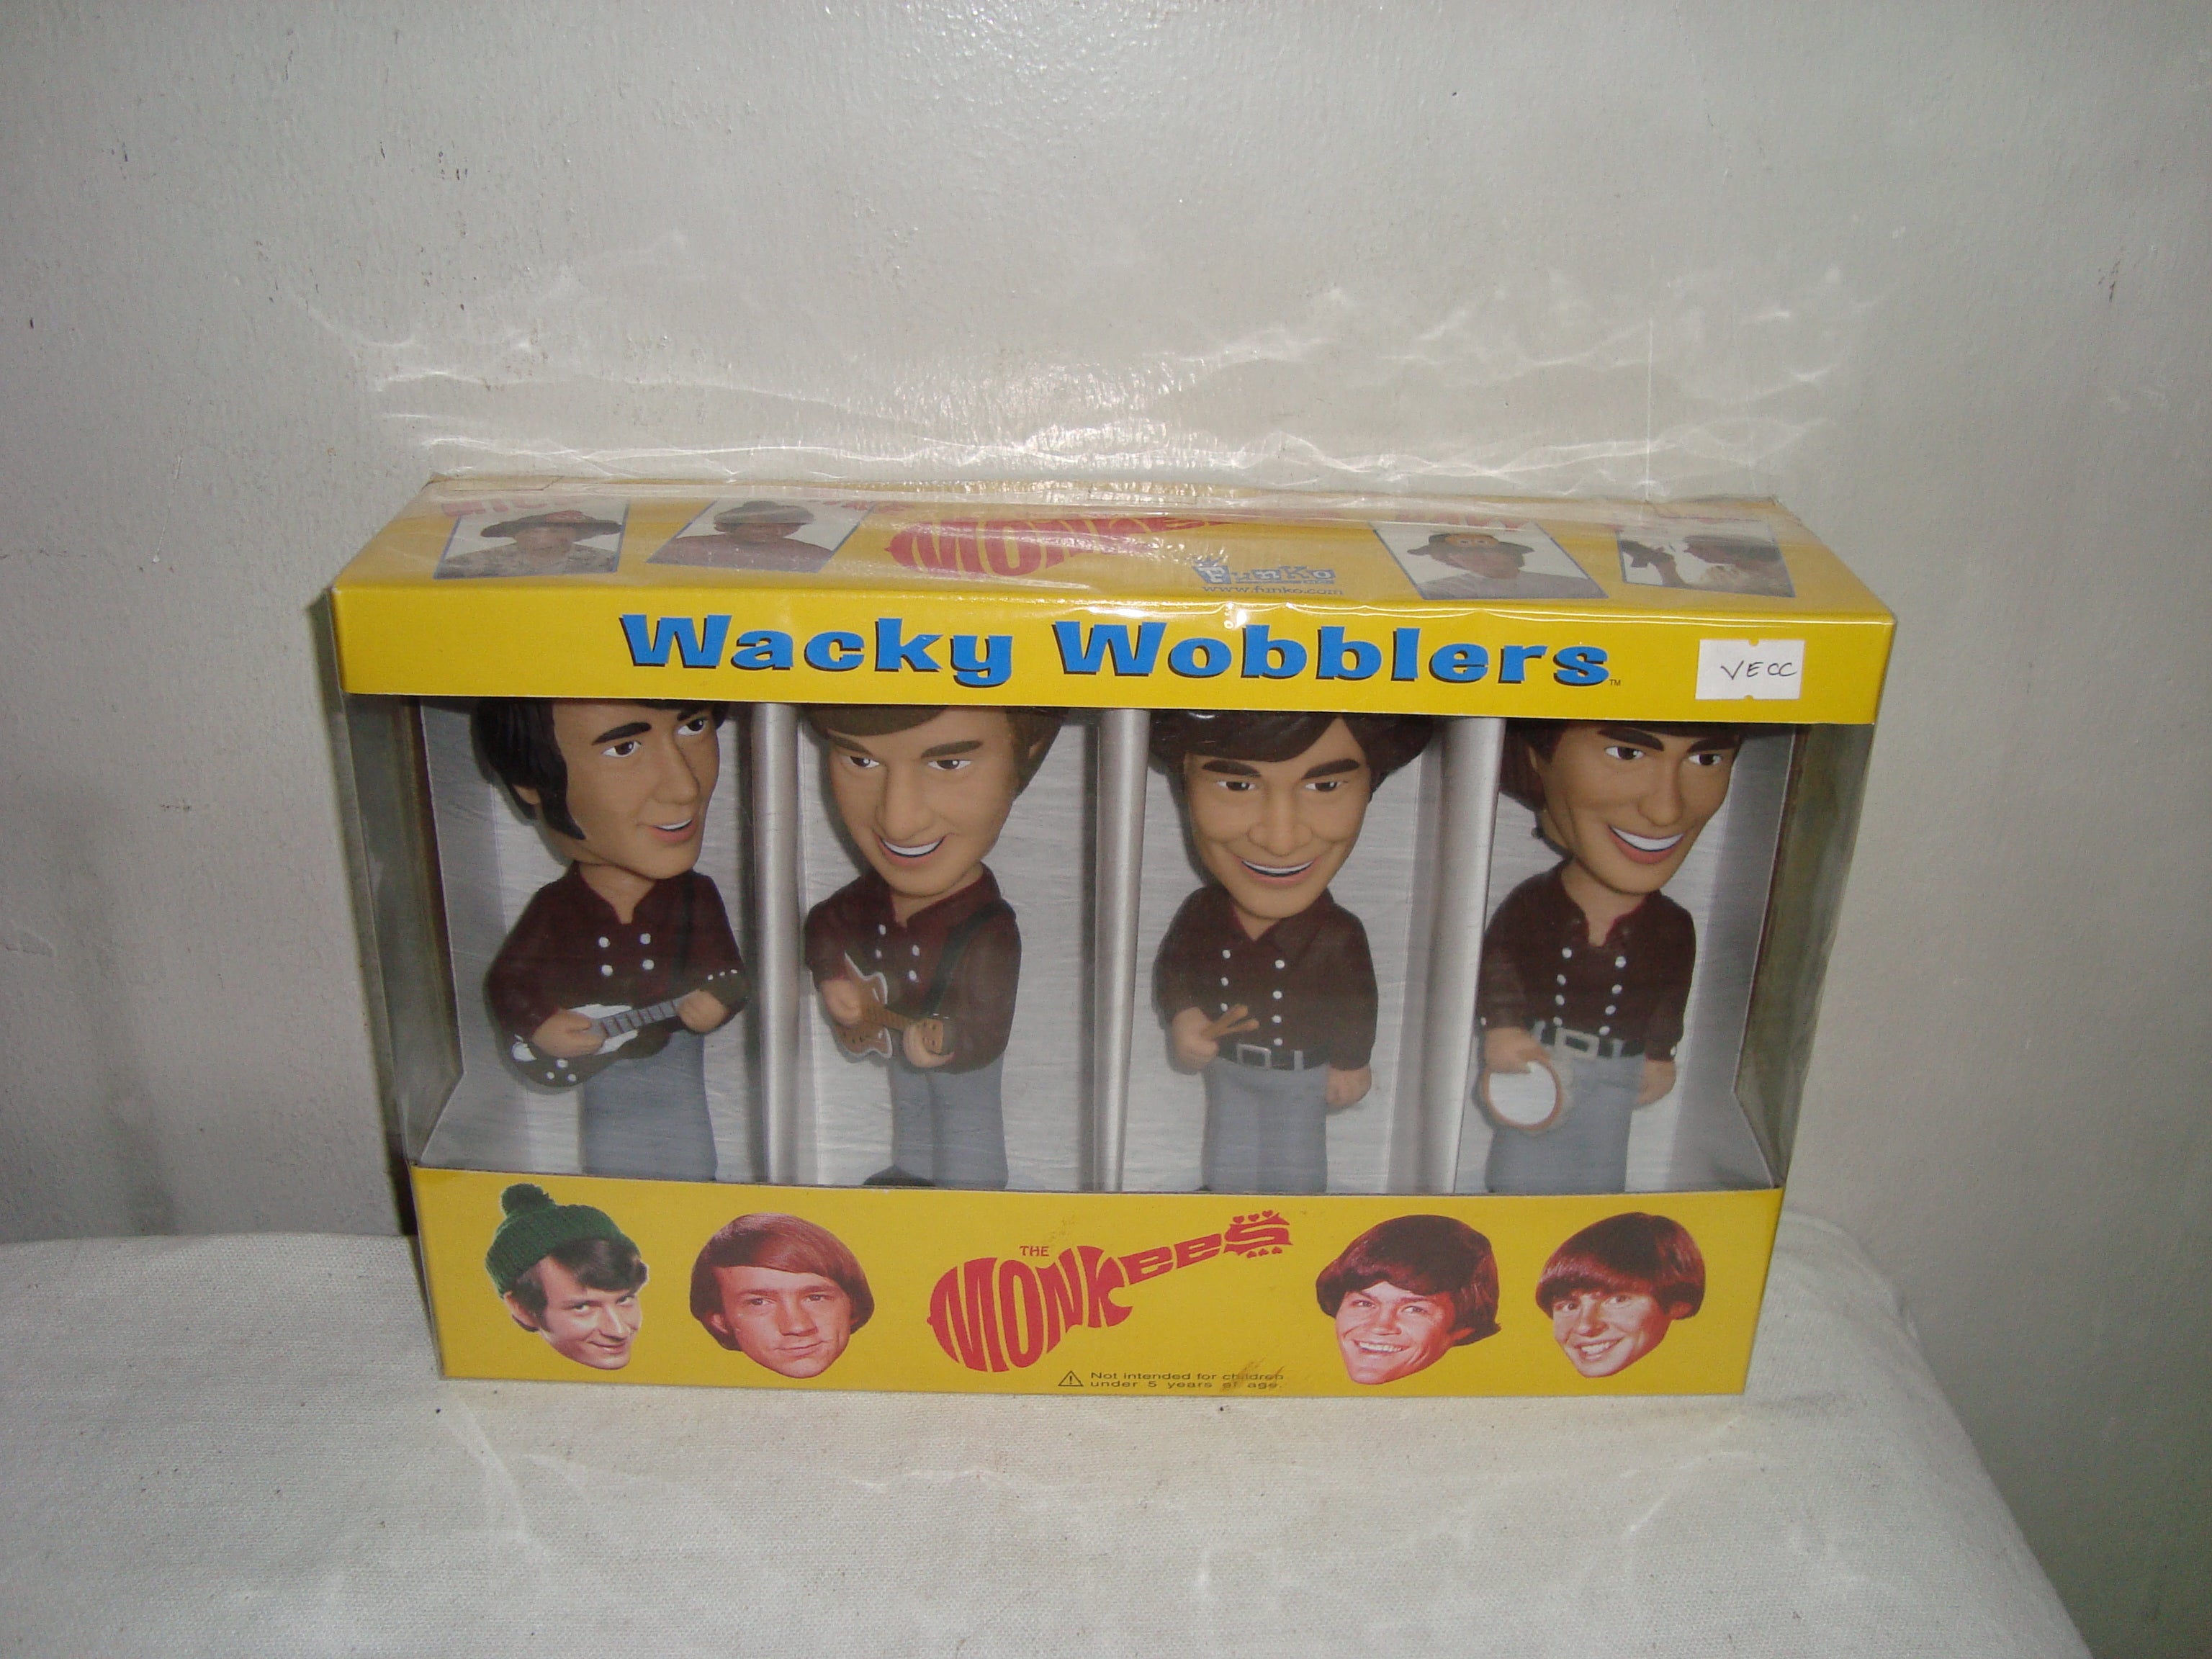 Wacky Wobblers The Monkees